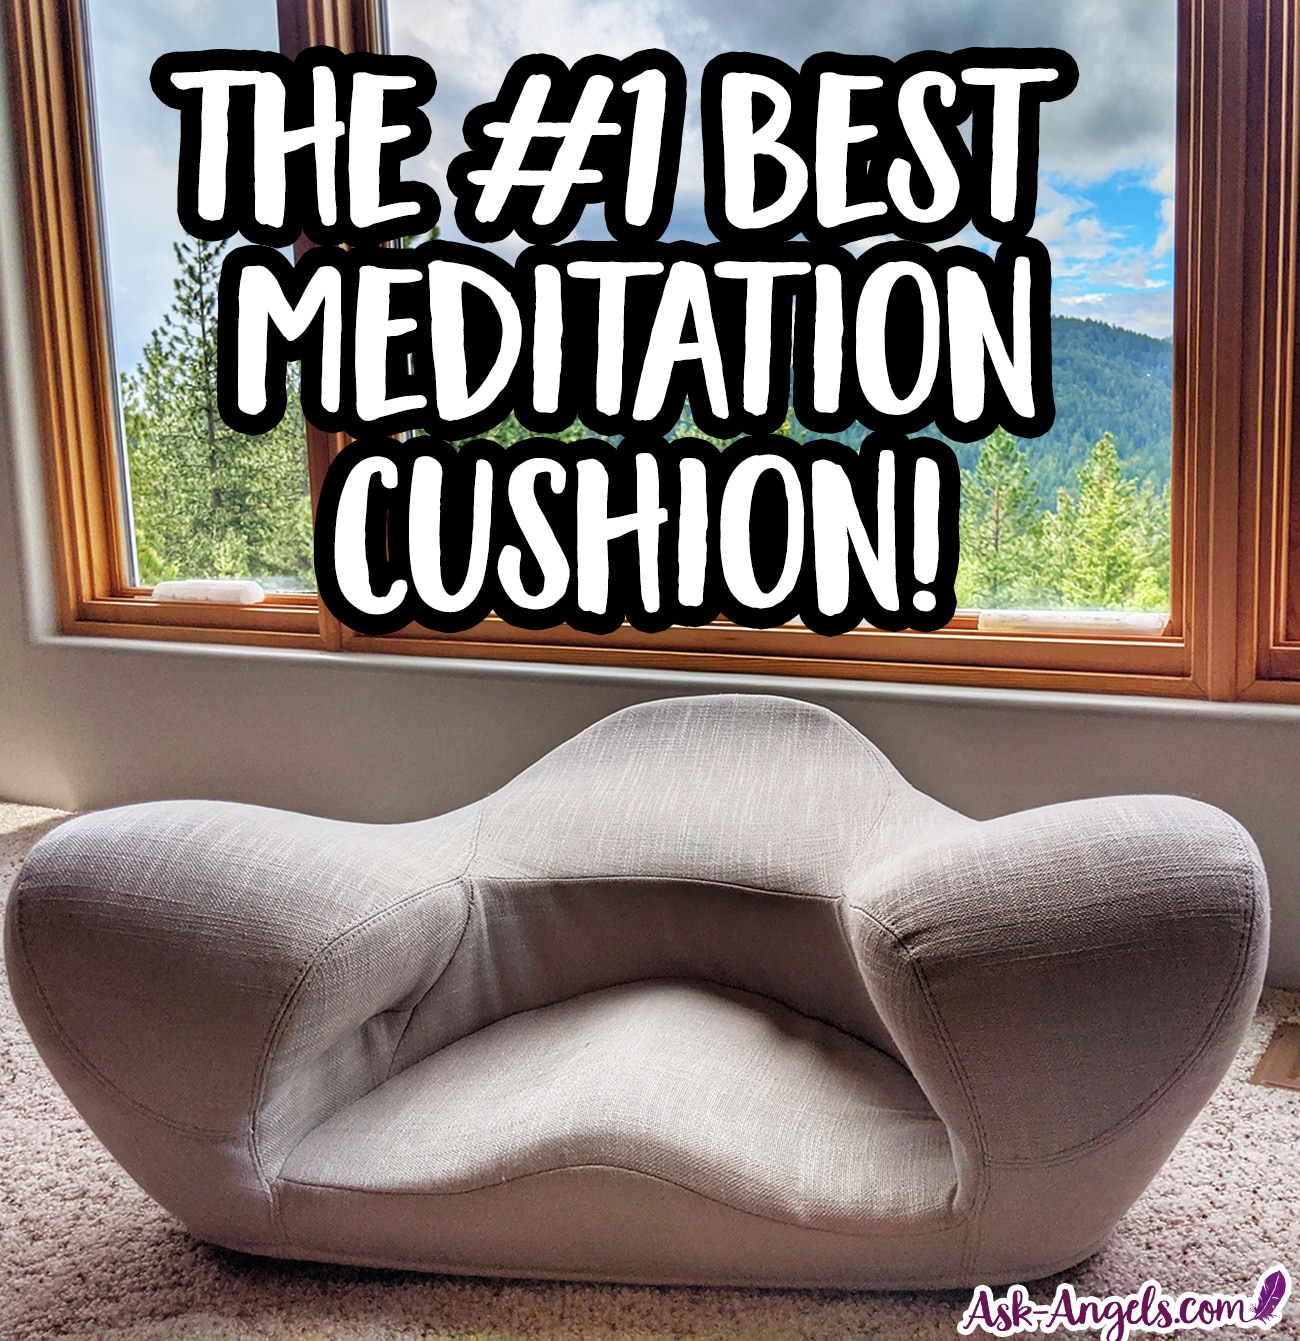 Best Meditation Cushion